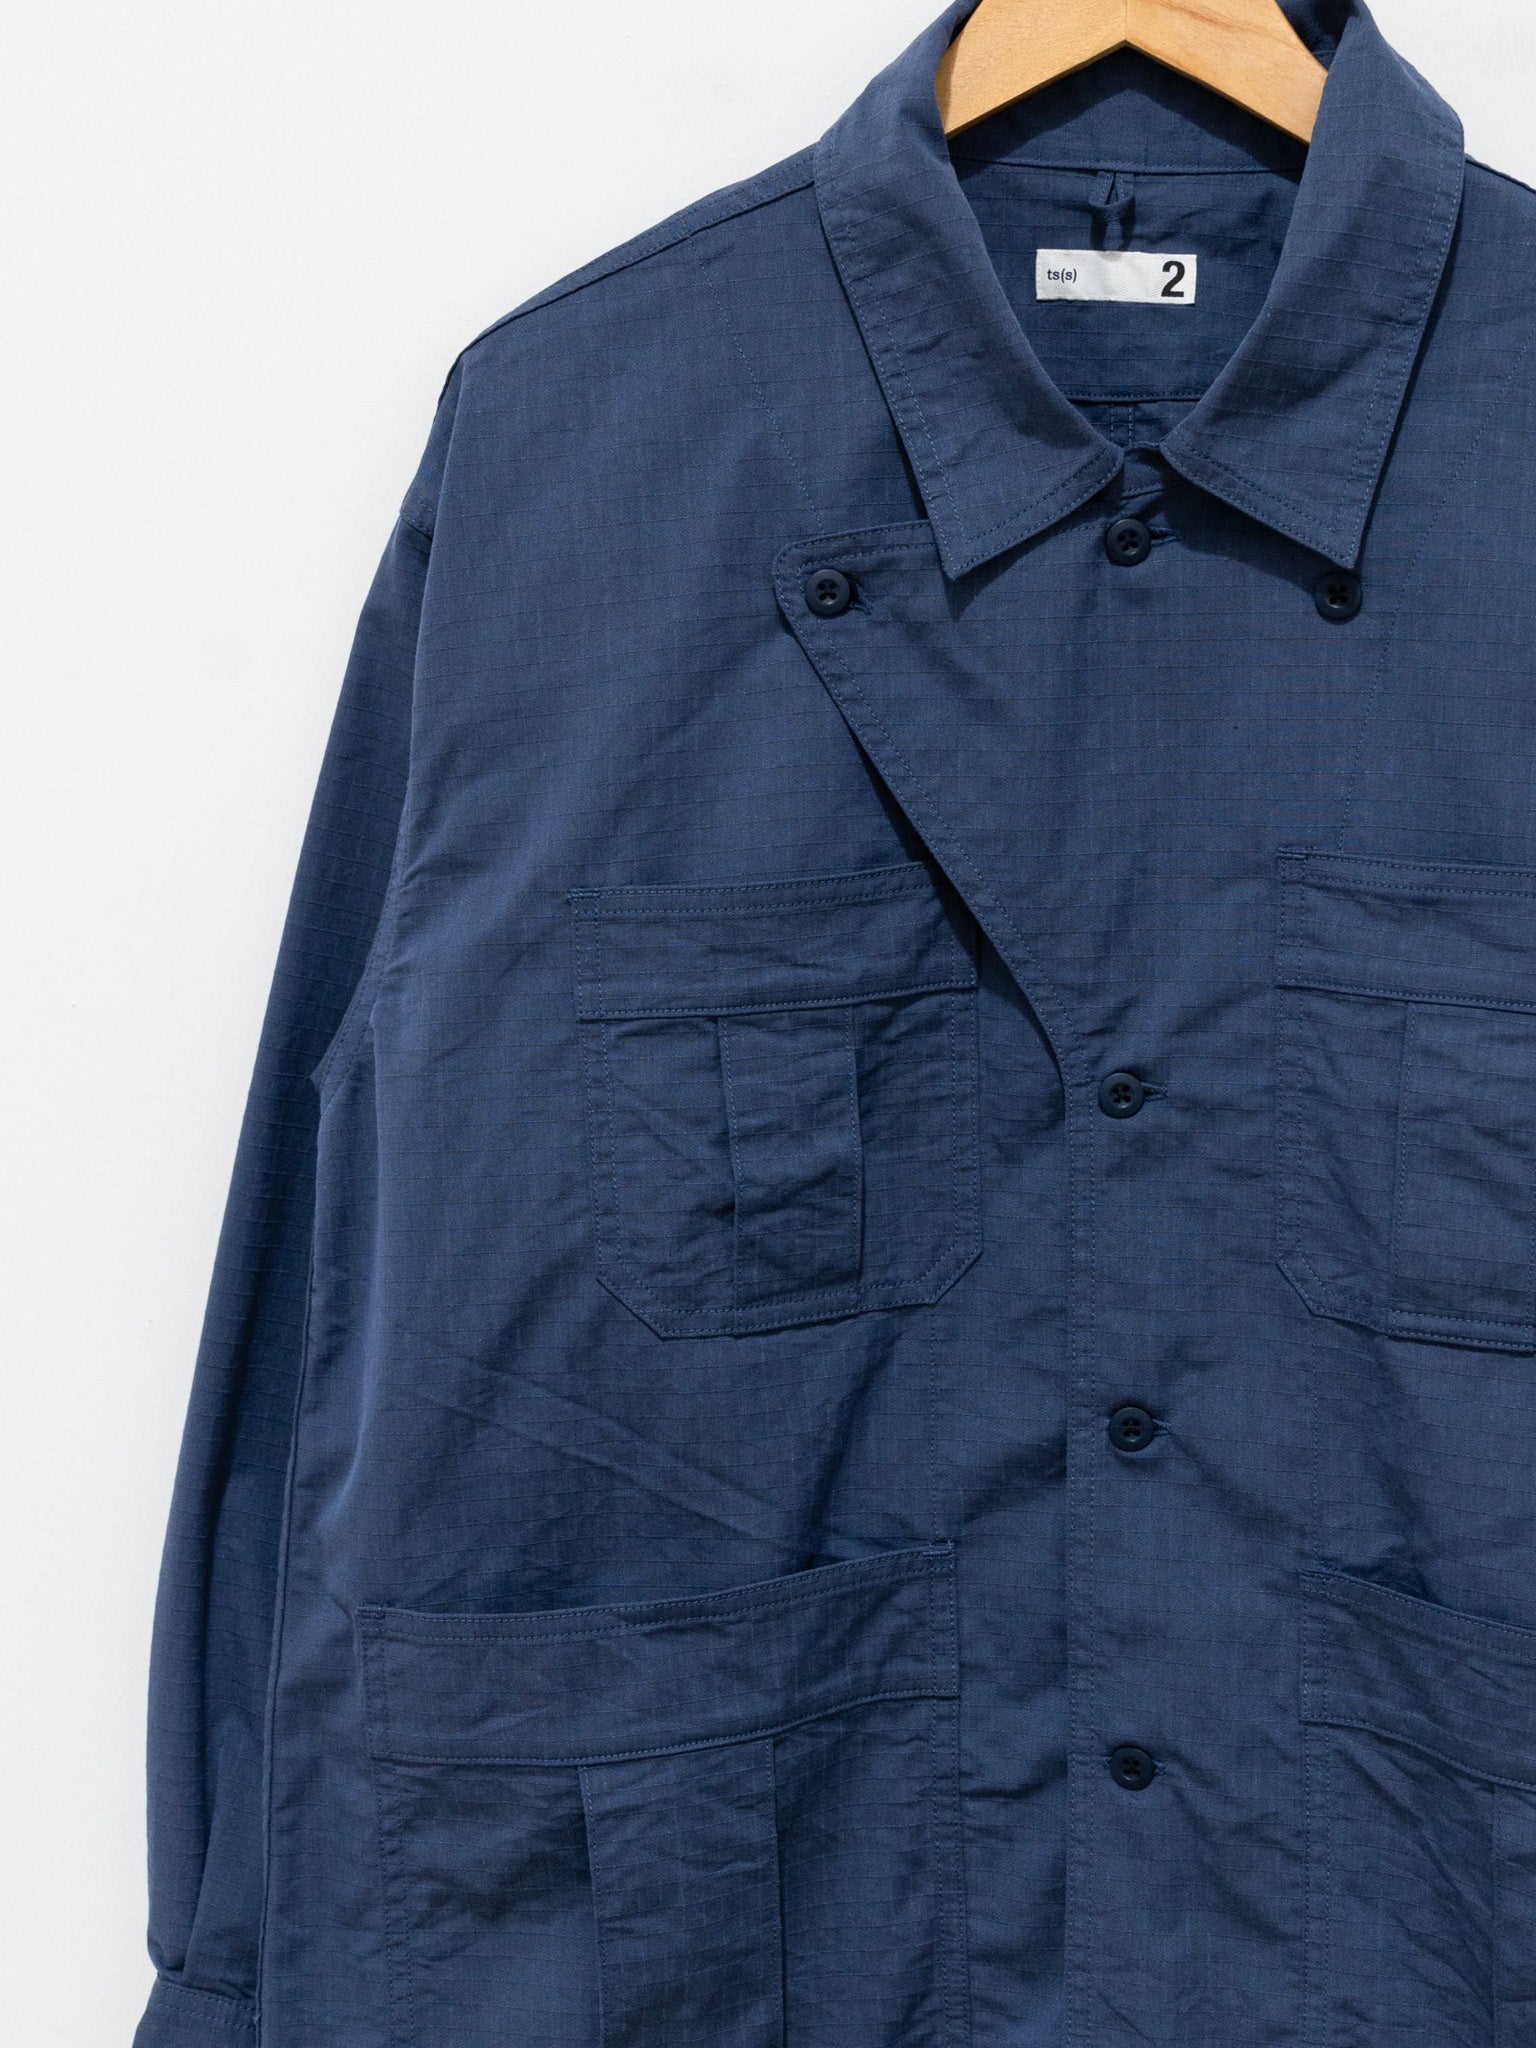 Namu Shop - ts(s) Ripstop Military Shirt Jacket - Blue